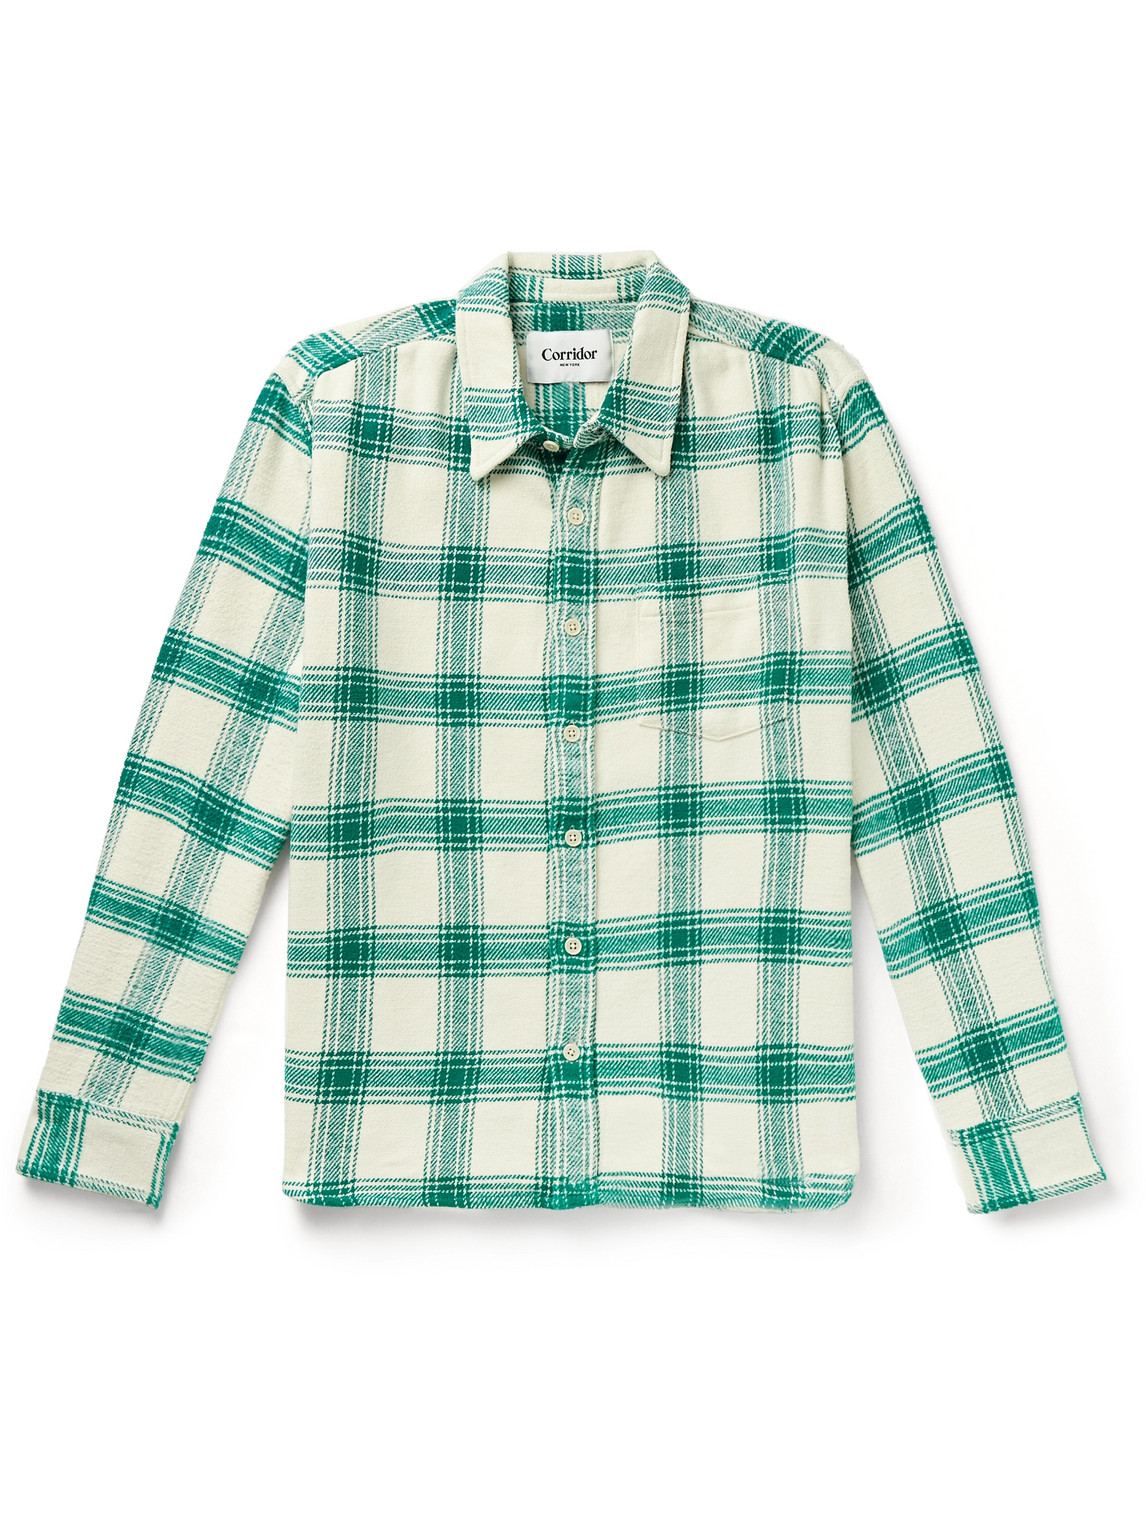 Corridor - Checked Cotton-Flannel Shirt - Men - Green - S von Corridor